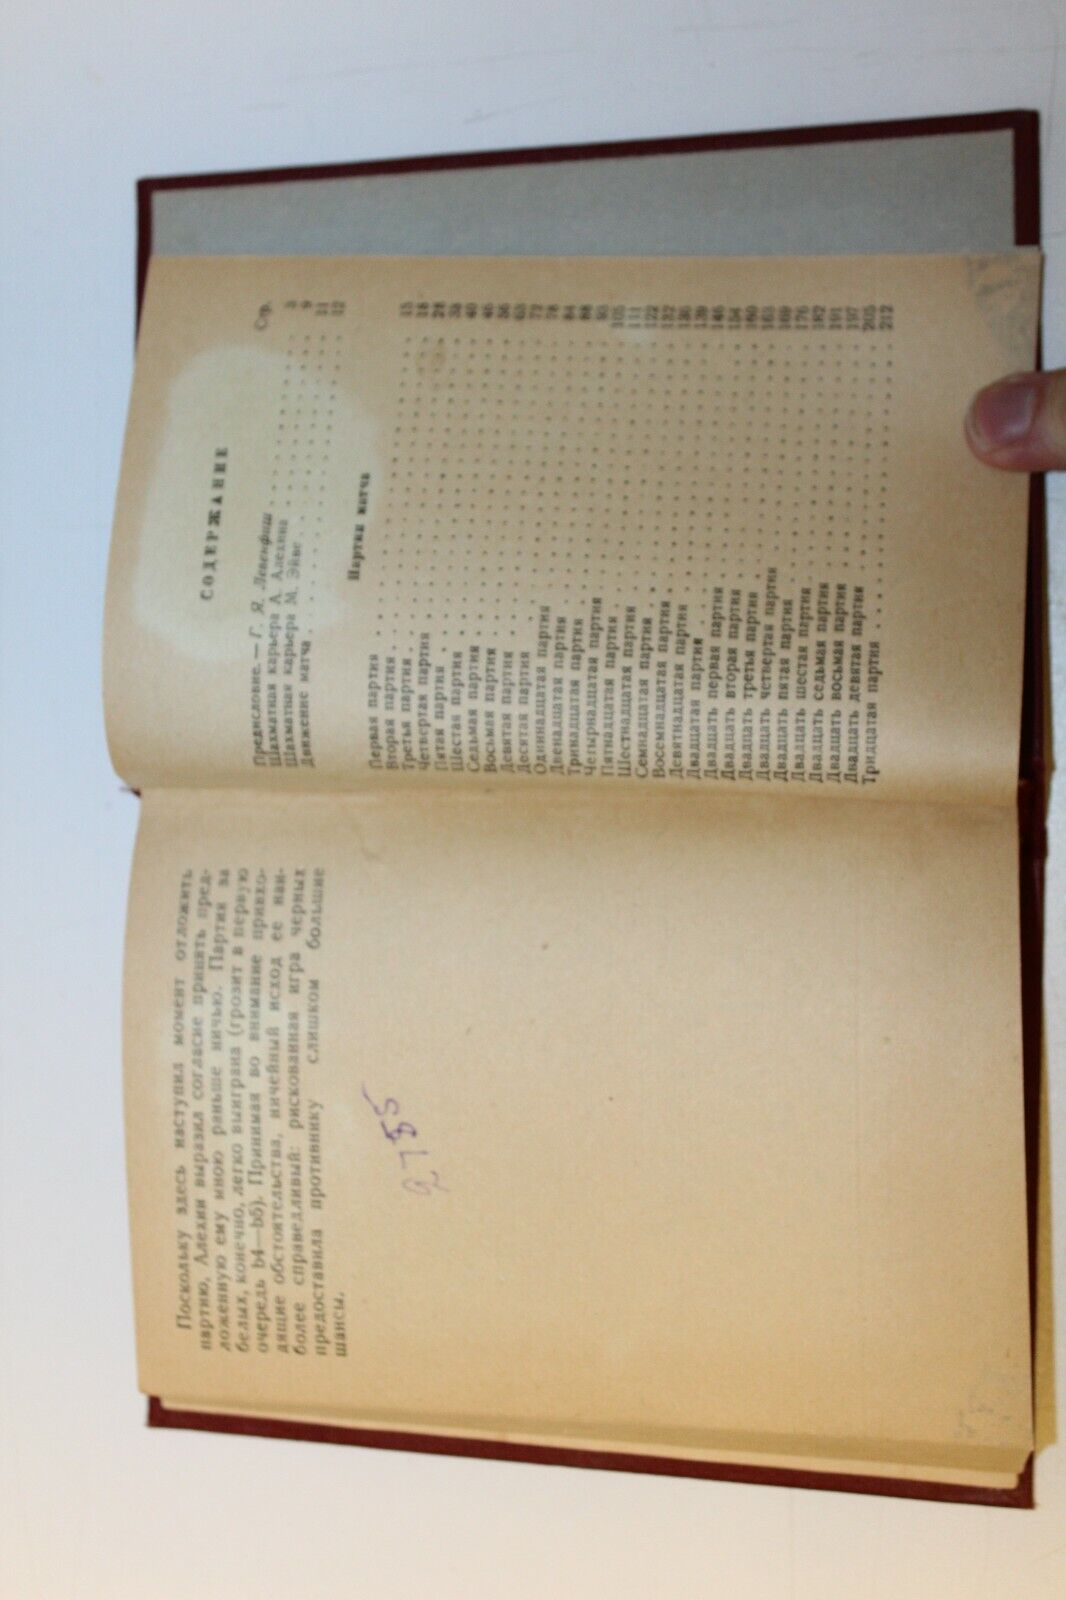 11528.Russian chess book: Levenfish 1936. Alekhine-Euwe world championship